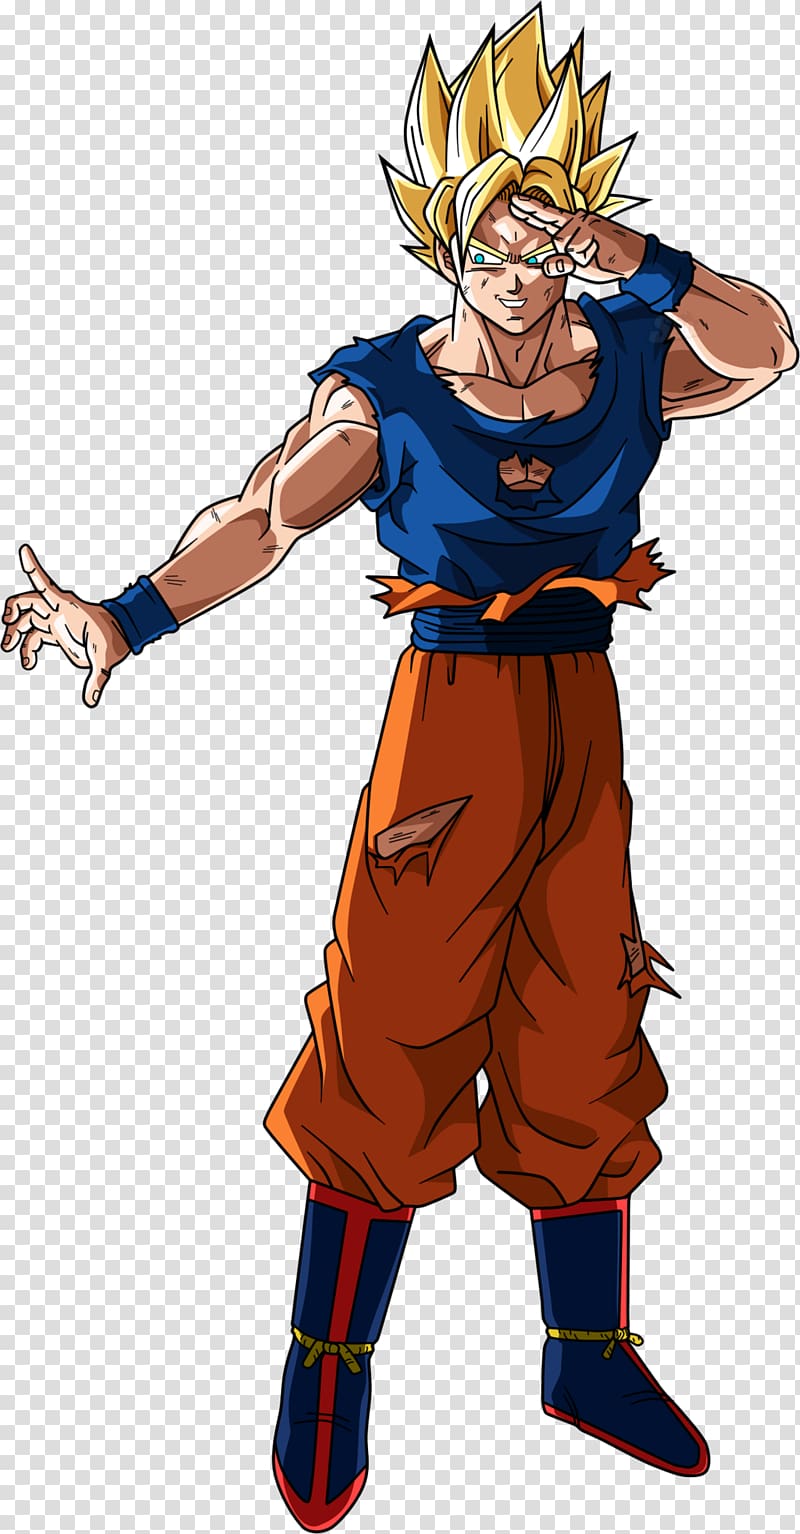 Goku Krillin Majin Buu Trunks Vegeta, goku, png